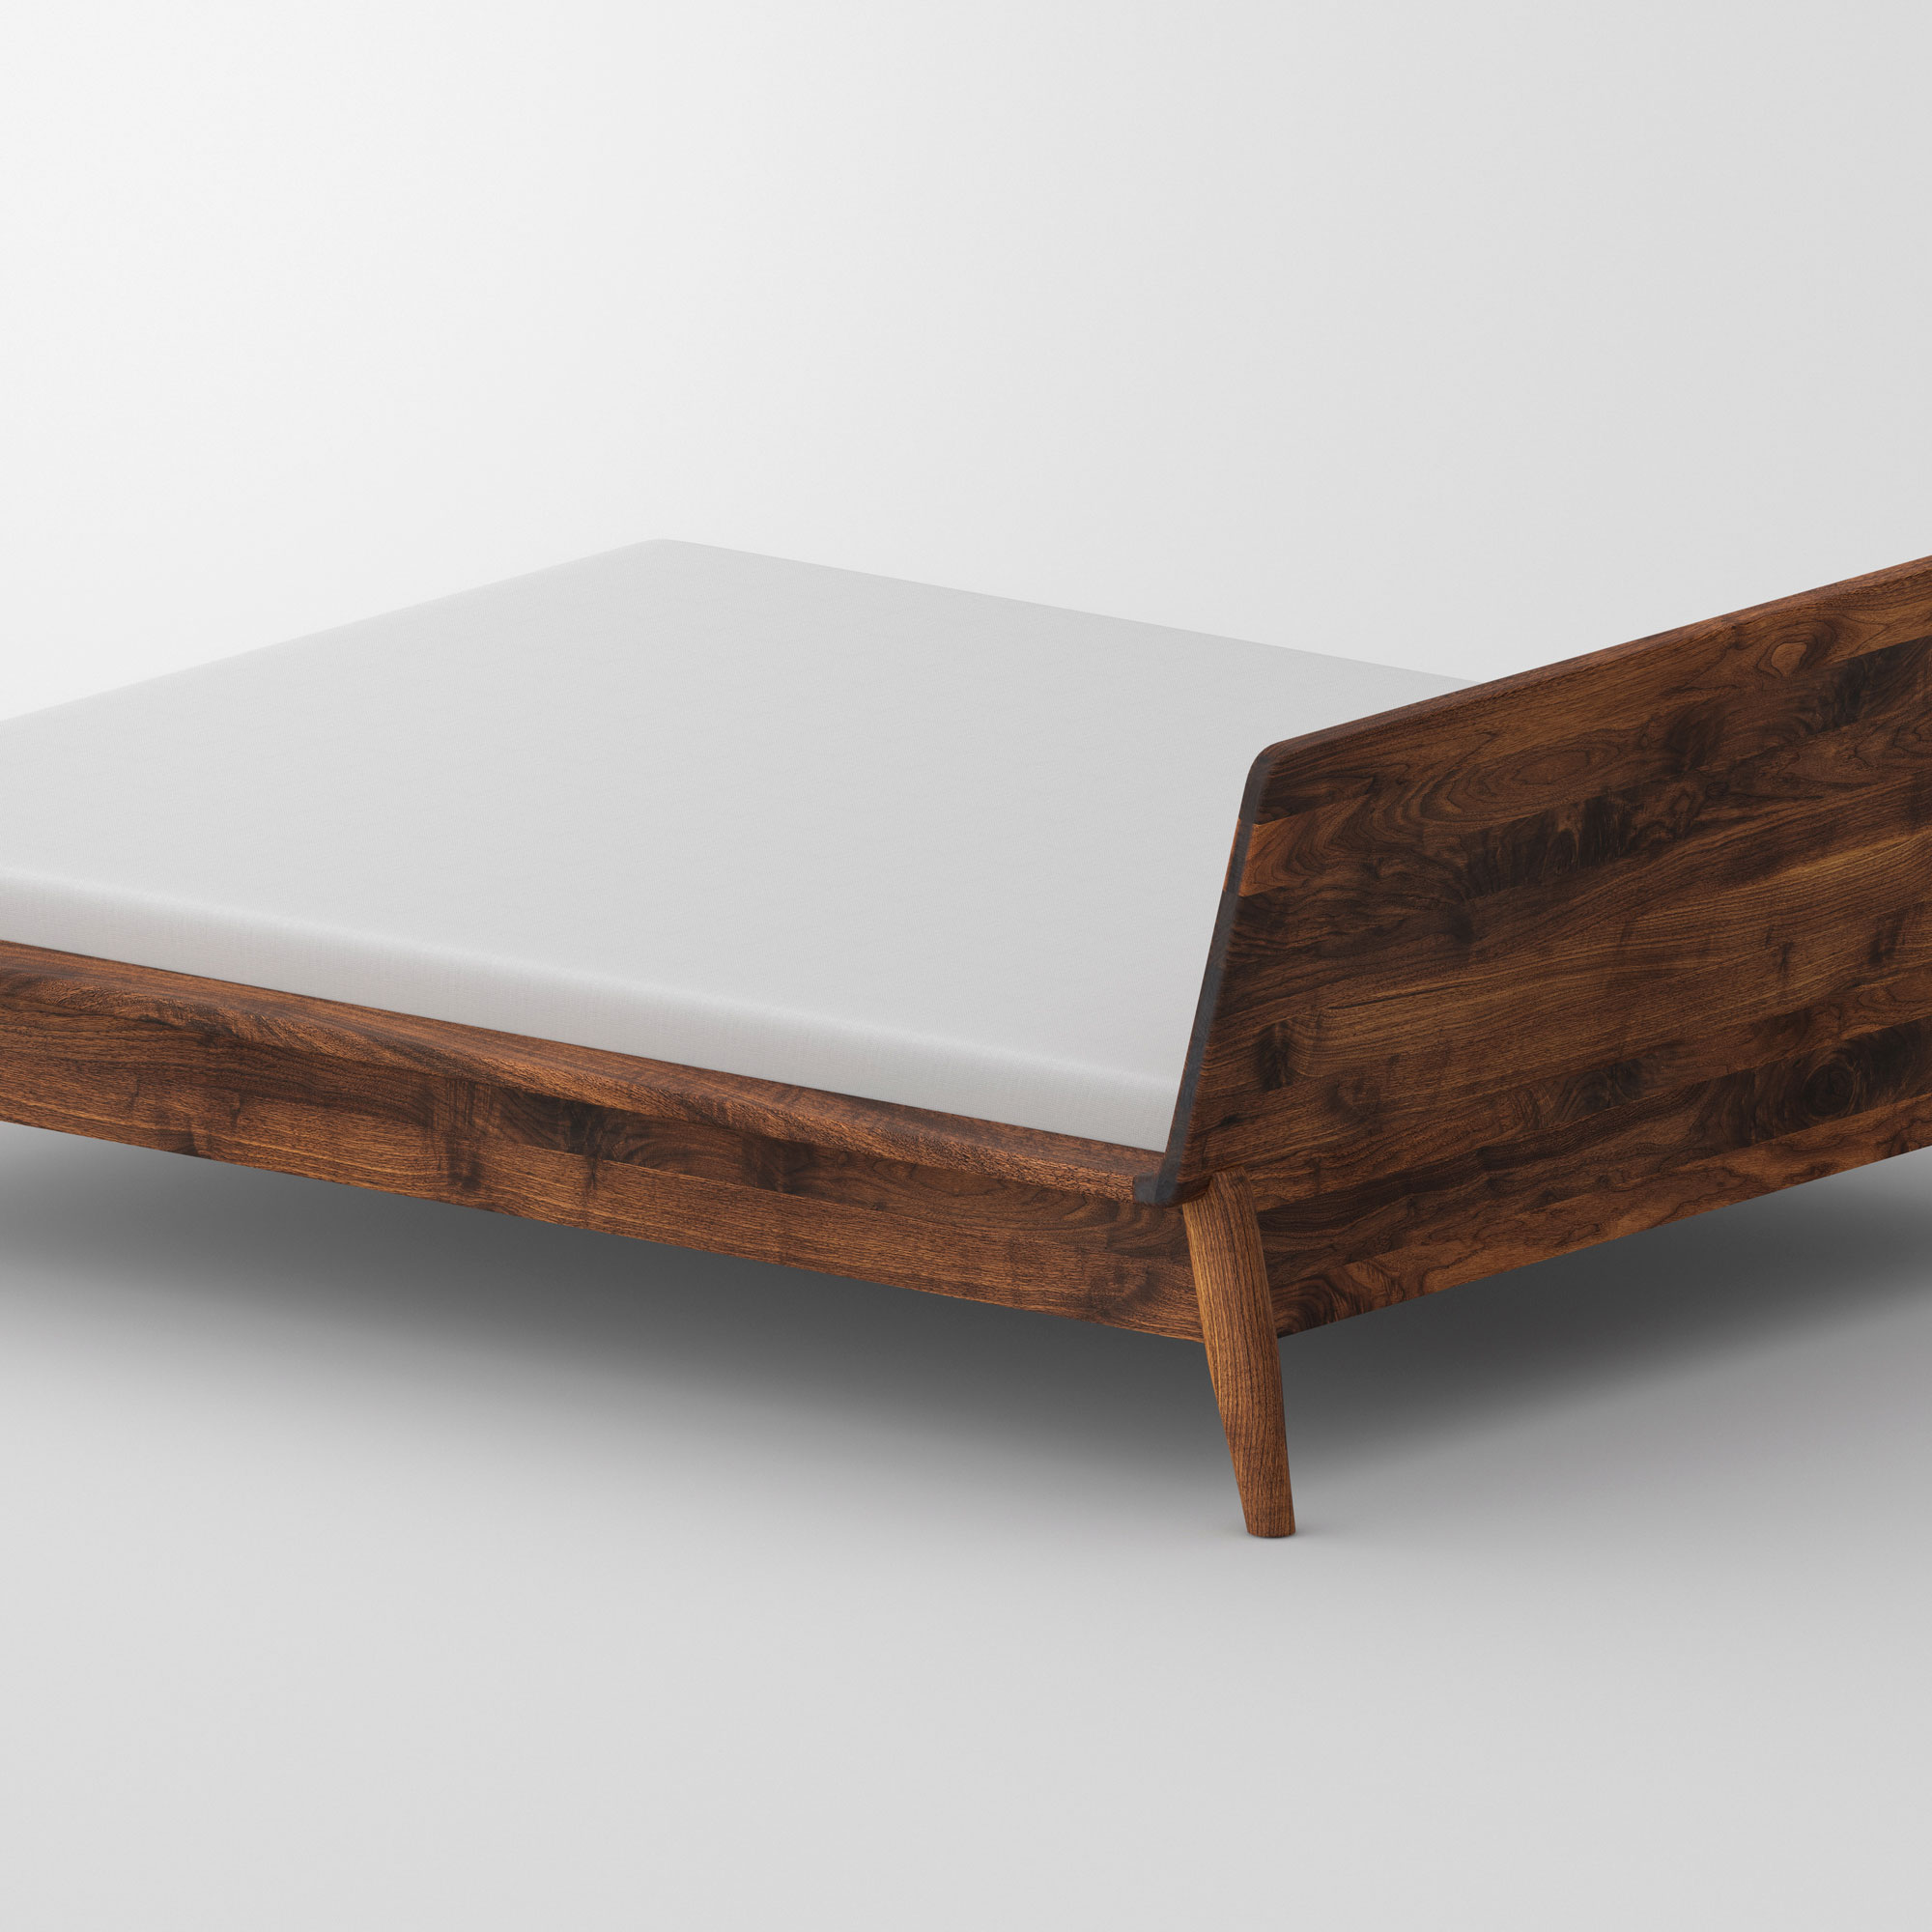 Designer Bed AETAS cam4 custom made in solid wood by vitamin design